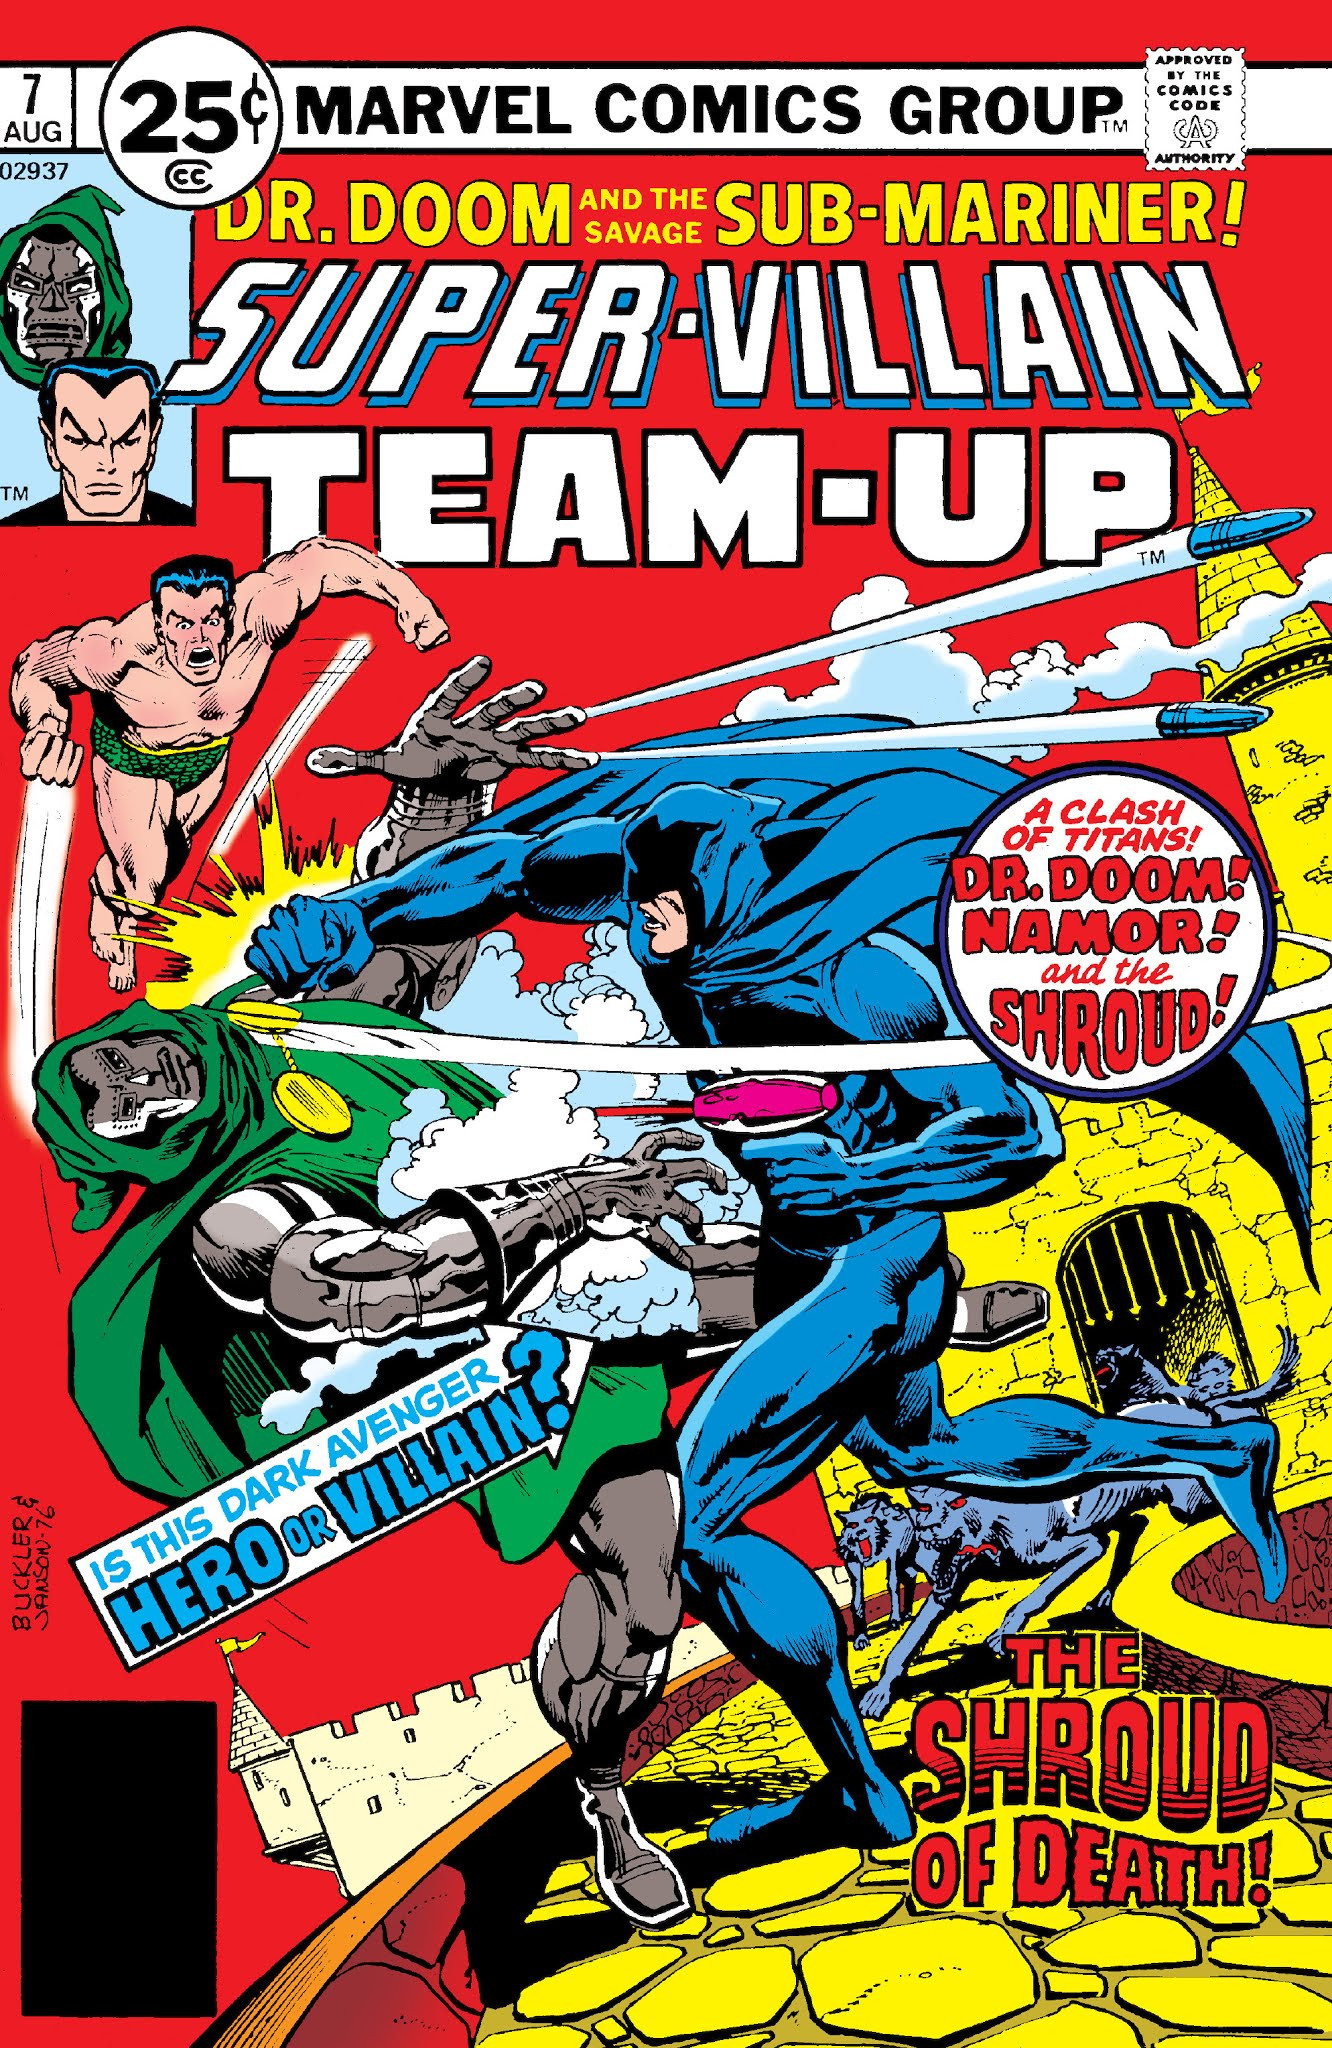 Marvel's Best Super Villain Team-Ups